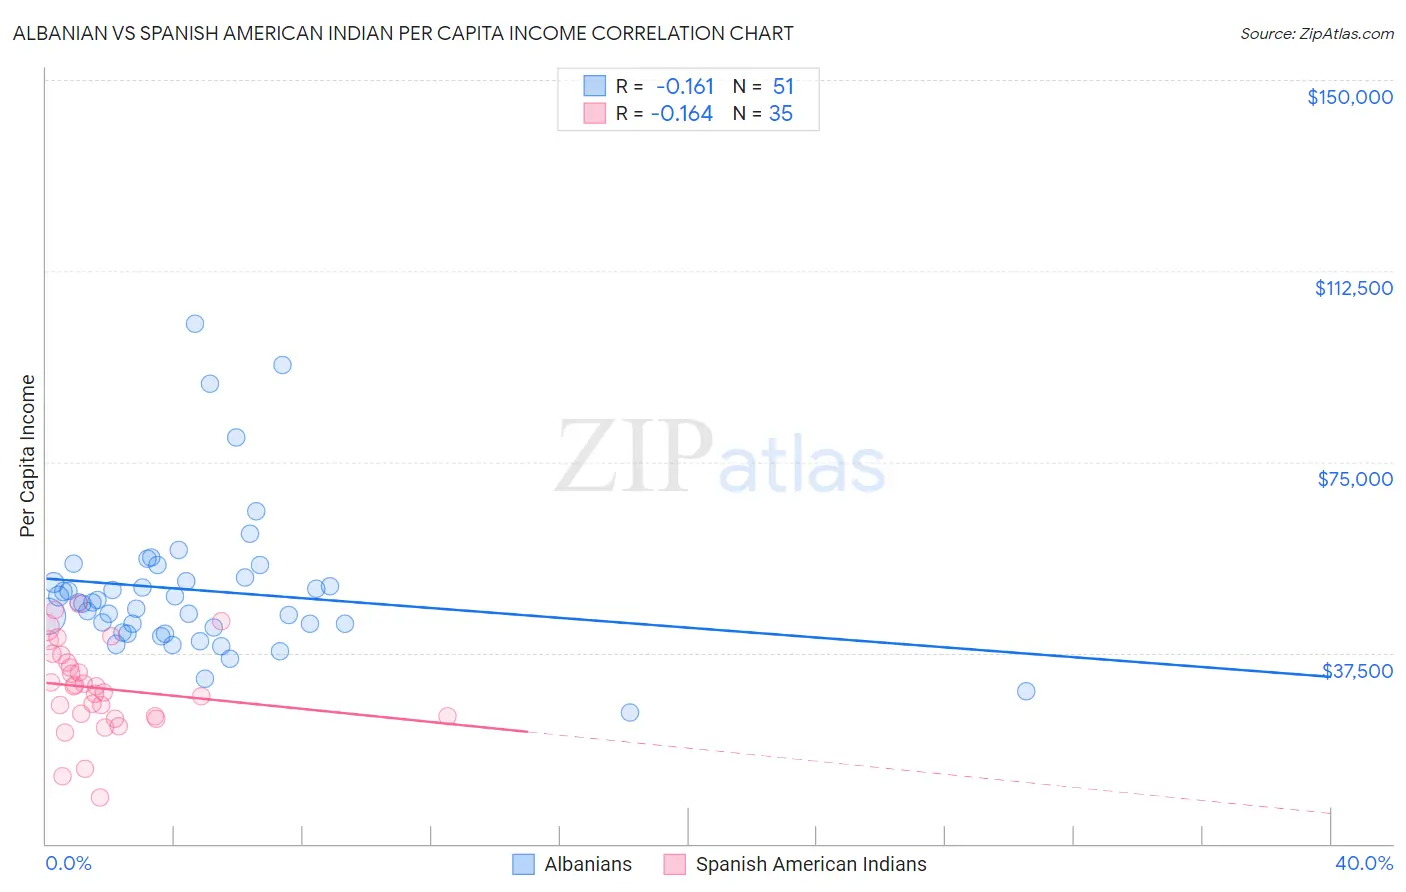 Albanian vs Spanish American Indian Per Capita Income